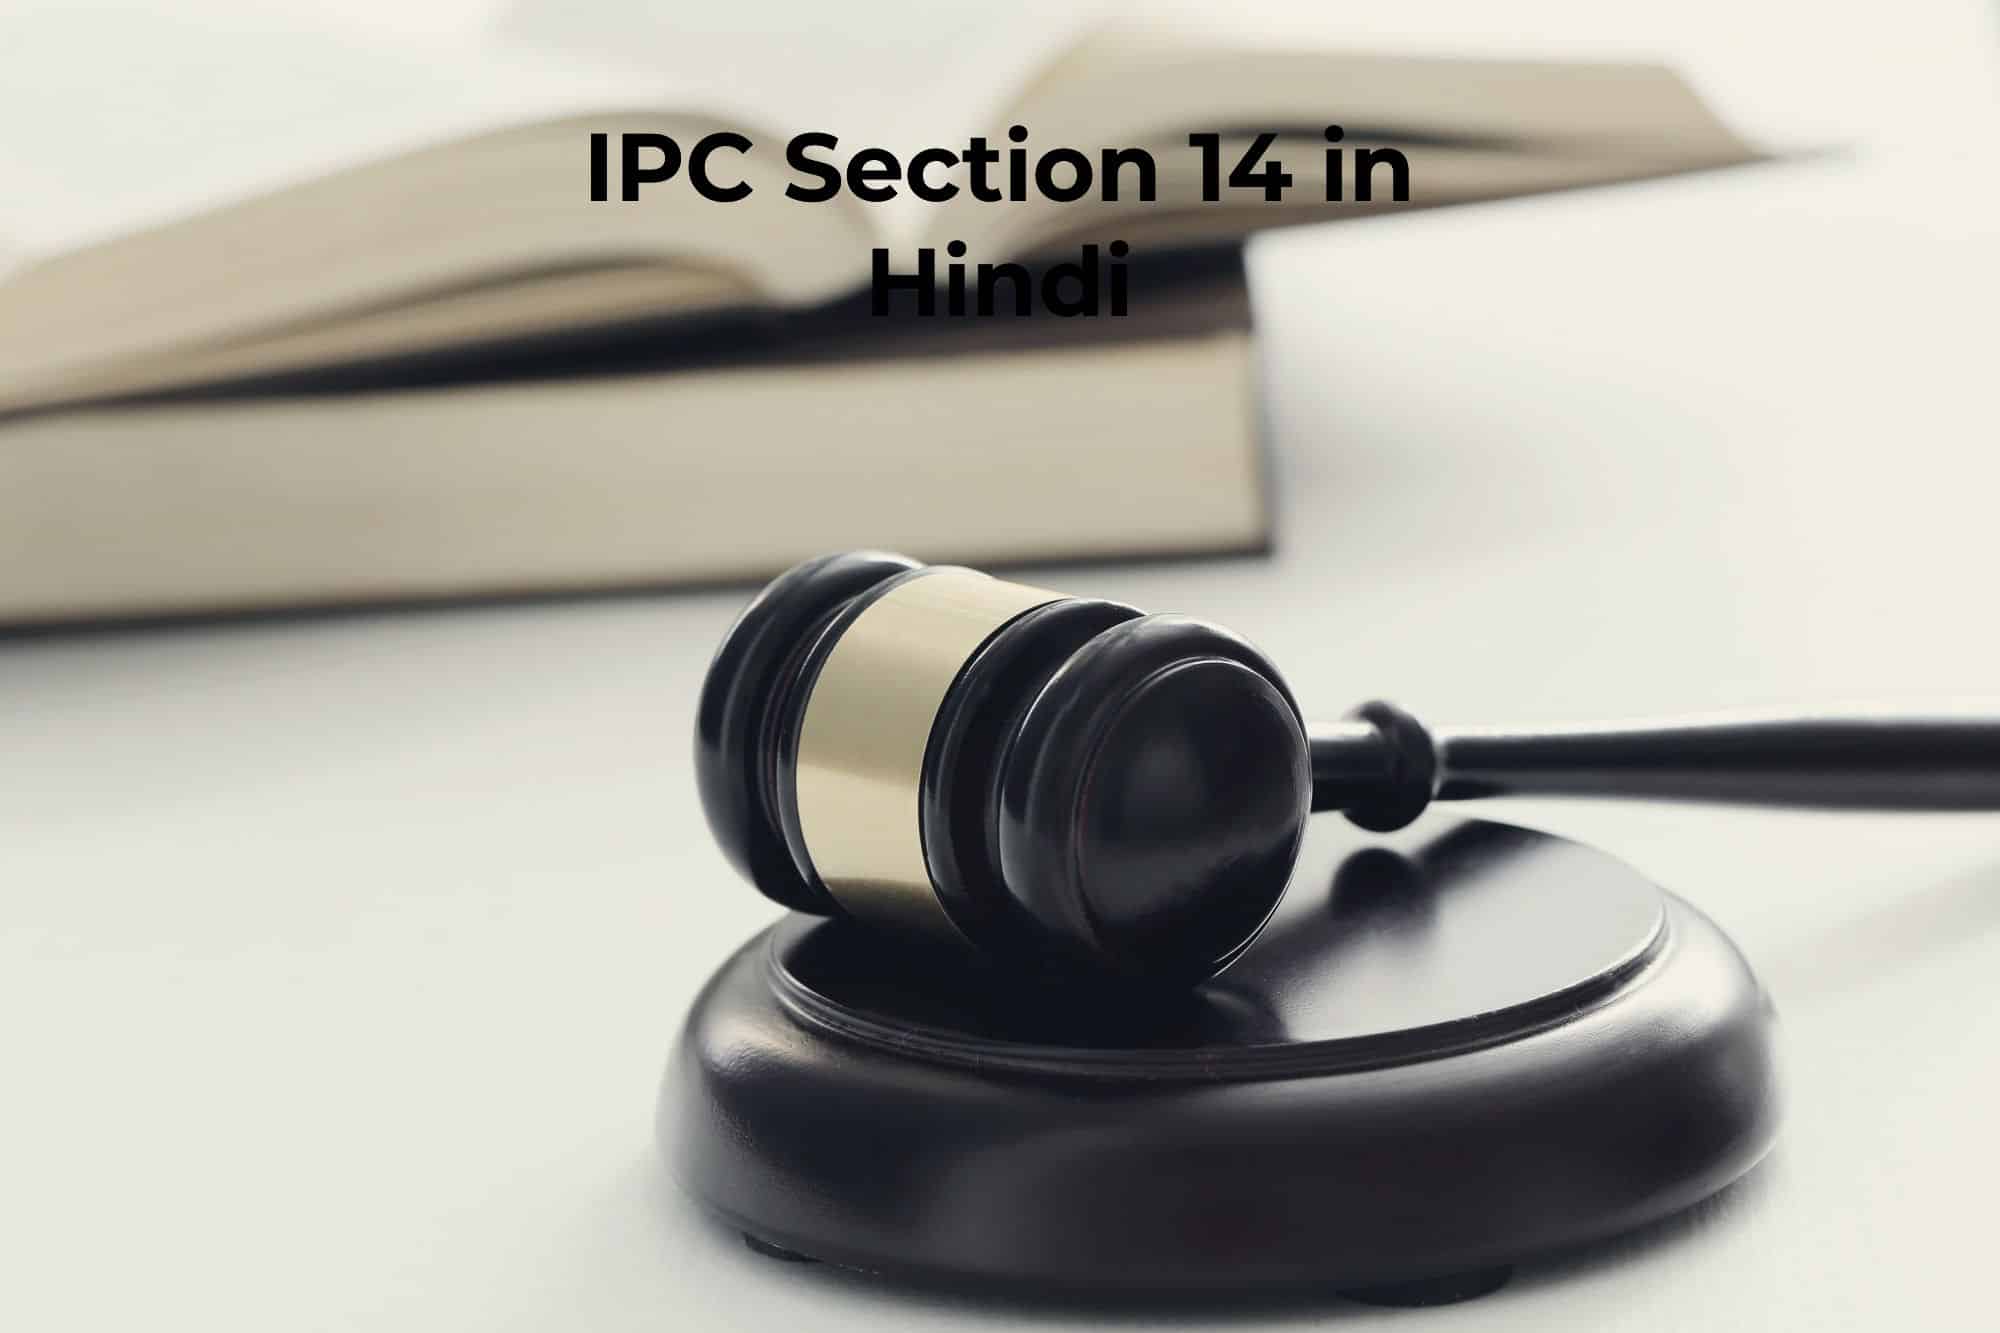 IPC Section 14 in Hindi, आईपीसी धारा 14 क्या है?